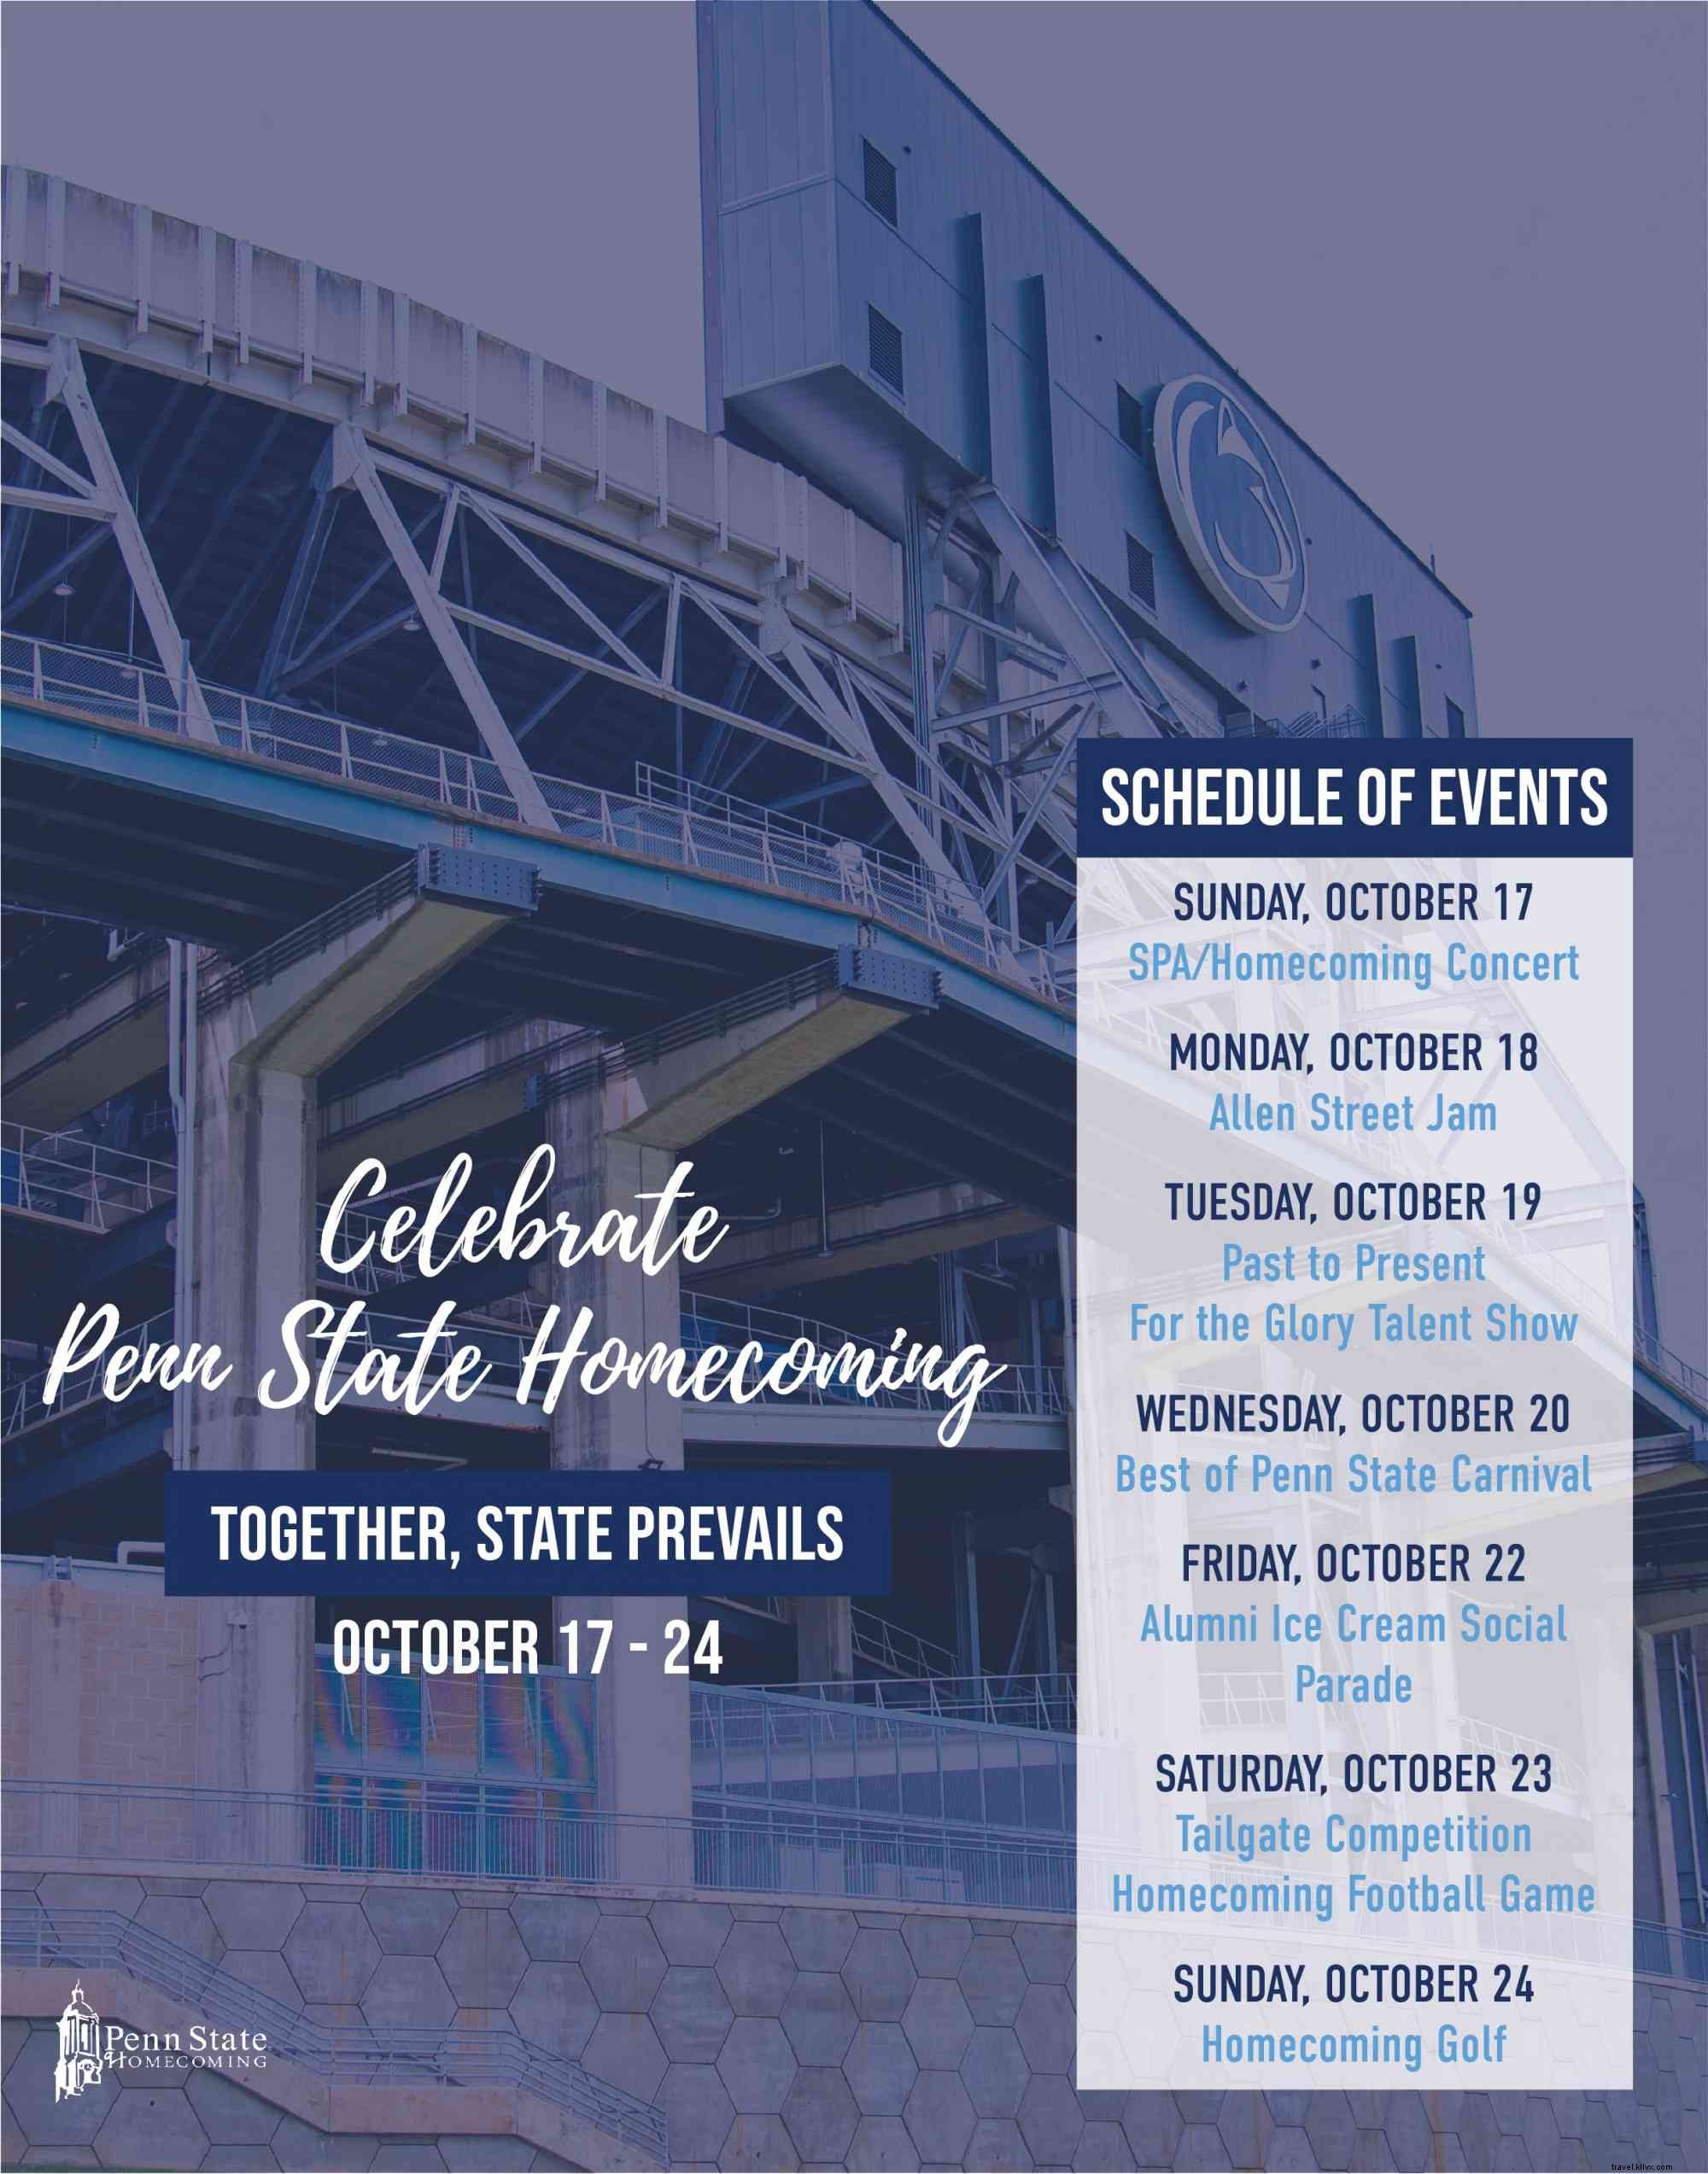 True Homecoming para Penn State 